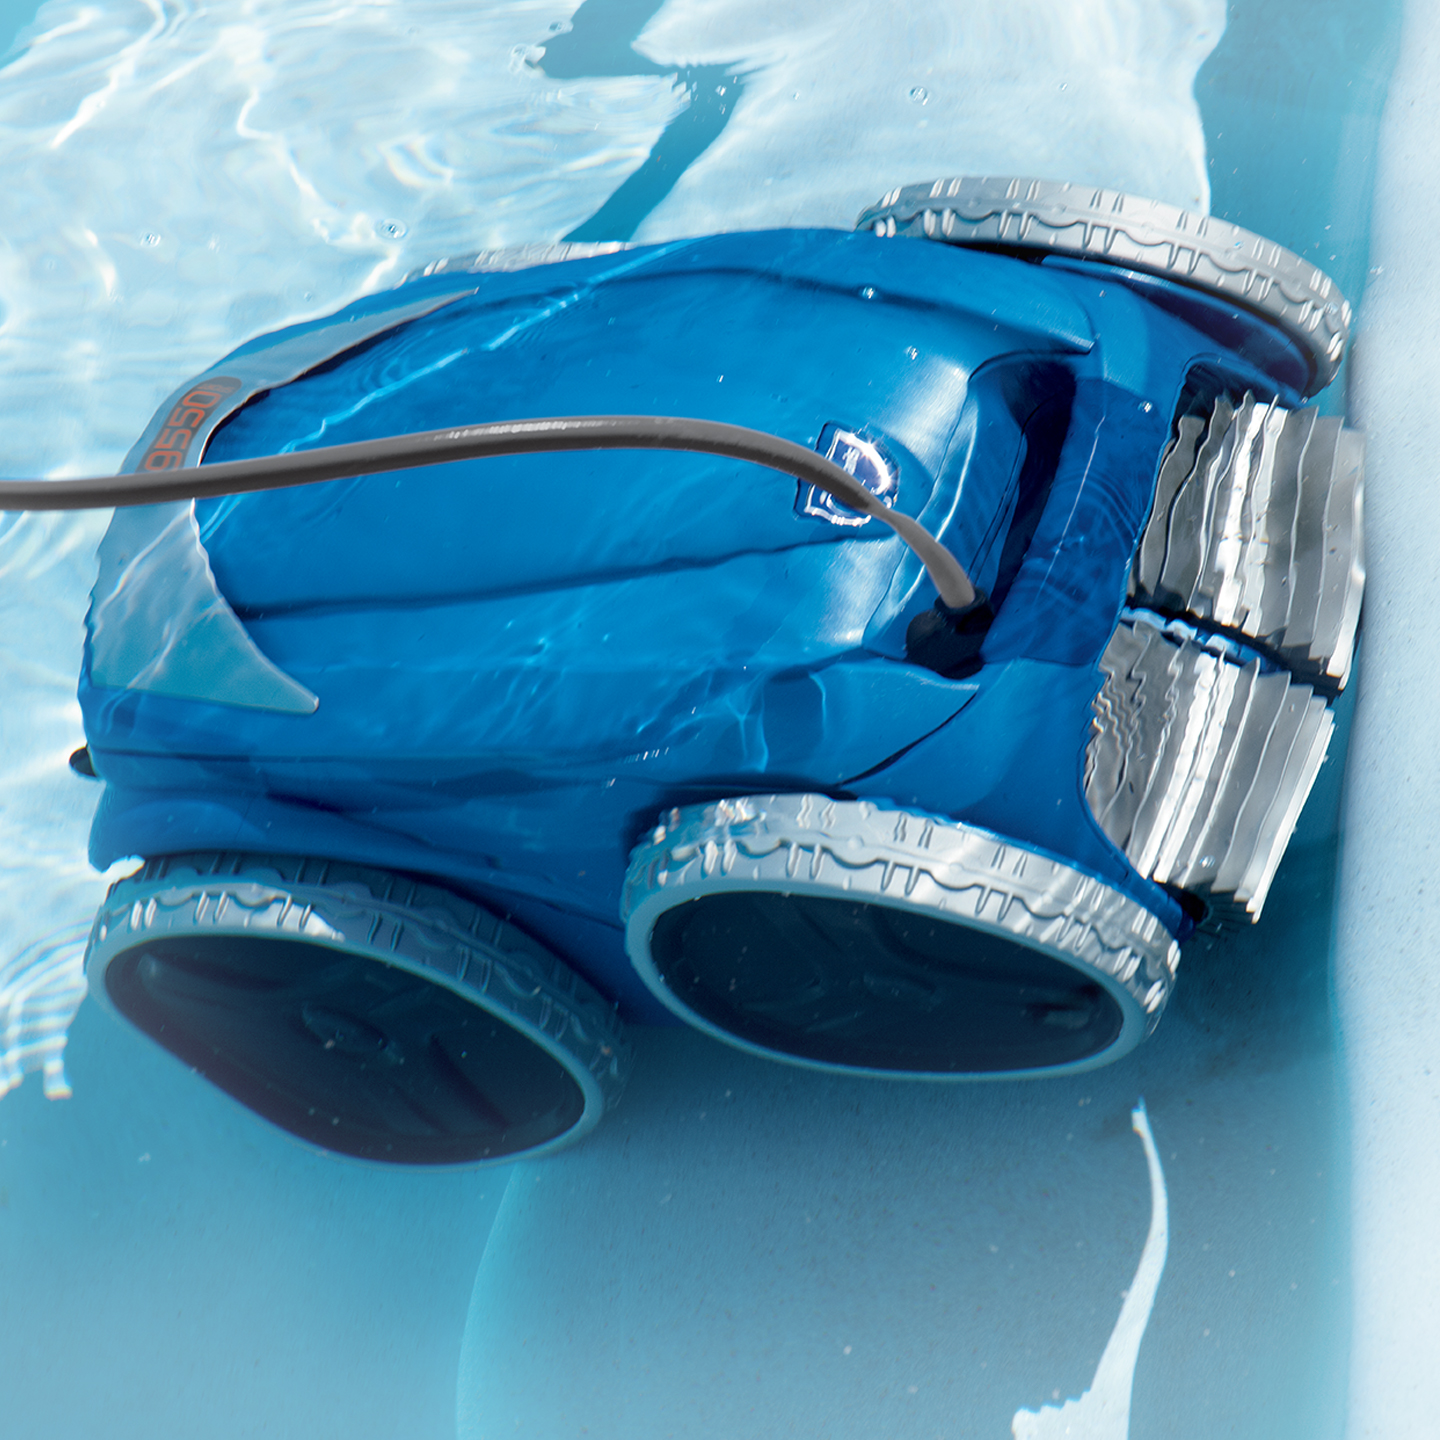 polaris-9550-sport-swimming-pool-robot-cleaner-polaris-pool